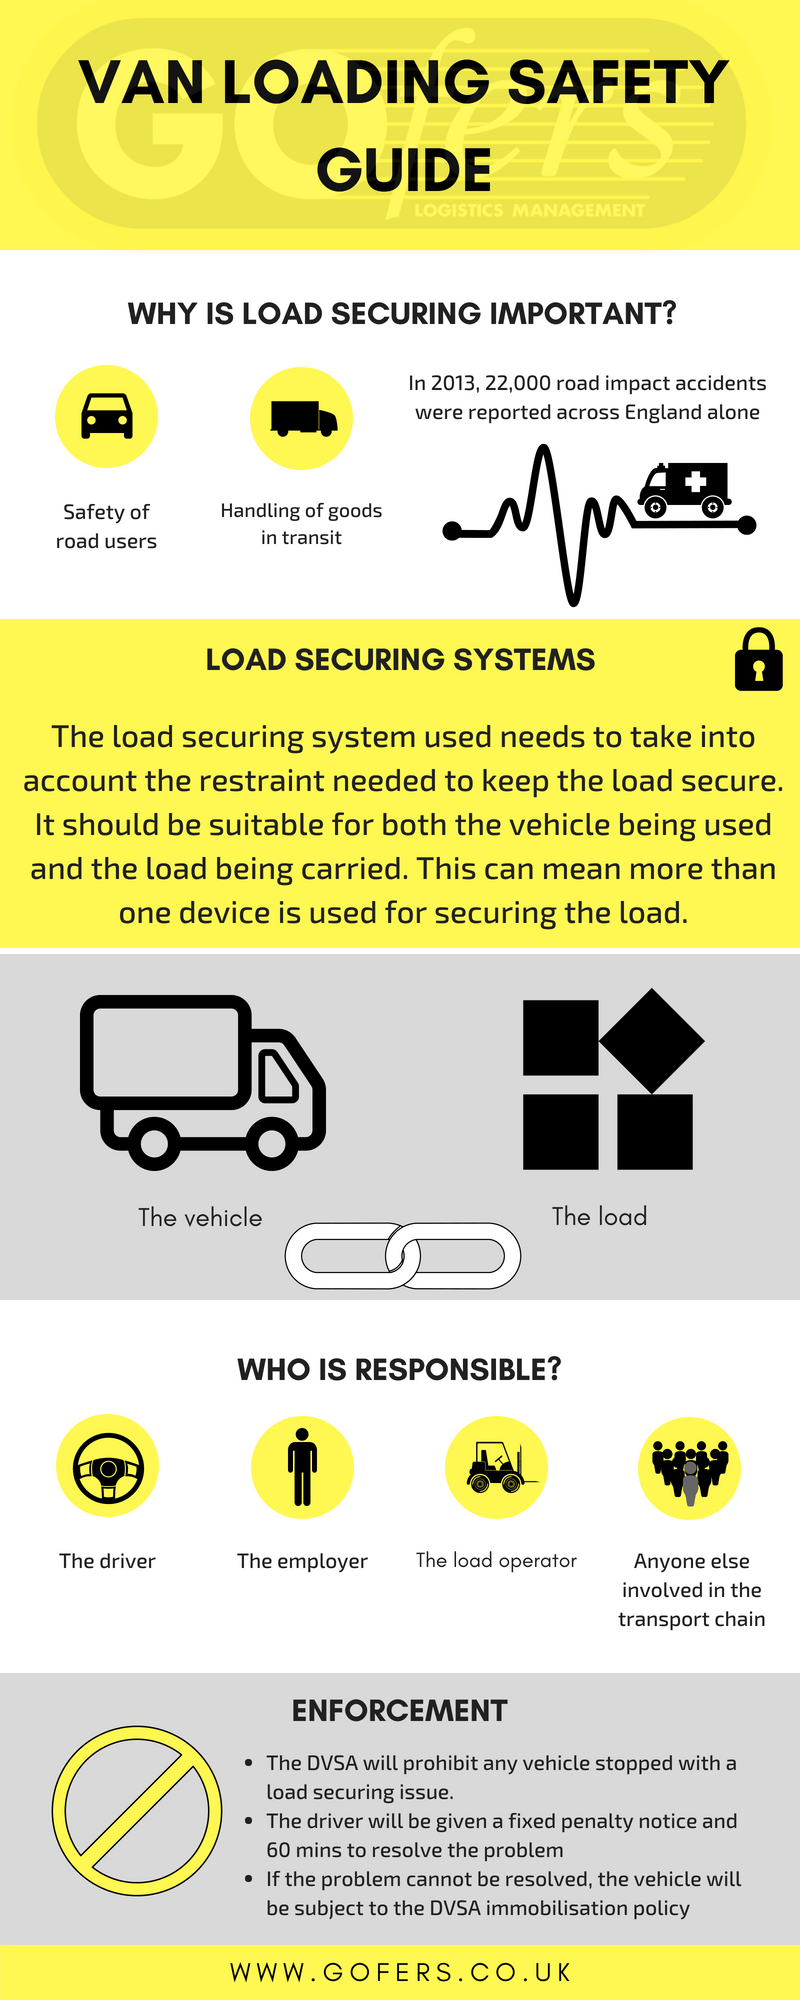 Van Loading Safety Guide